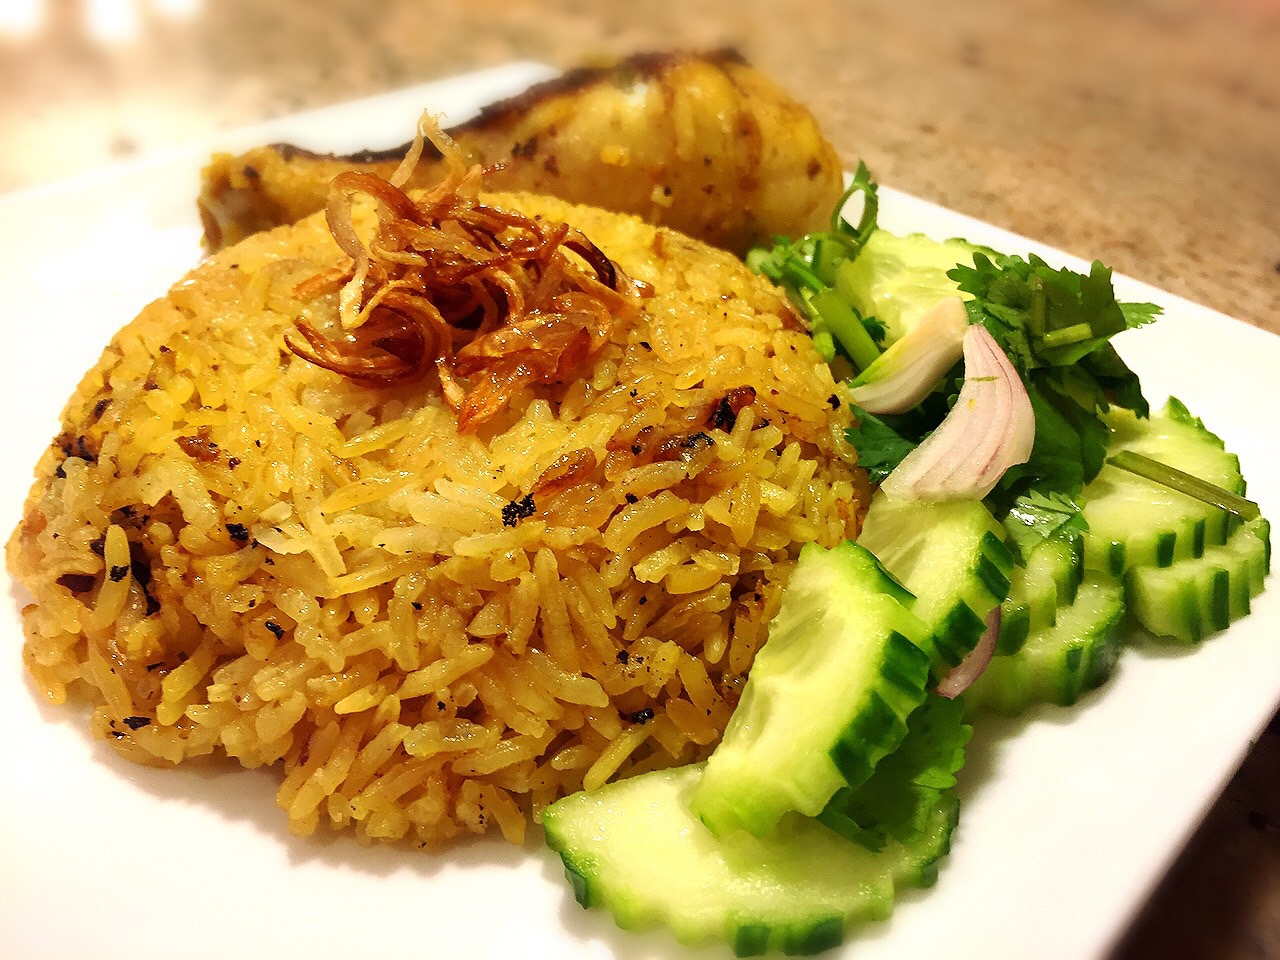 Khao mok gai – Tender chicken buried in sweet yellow rice